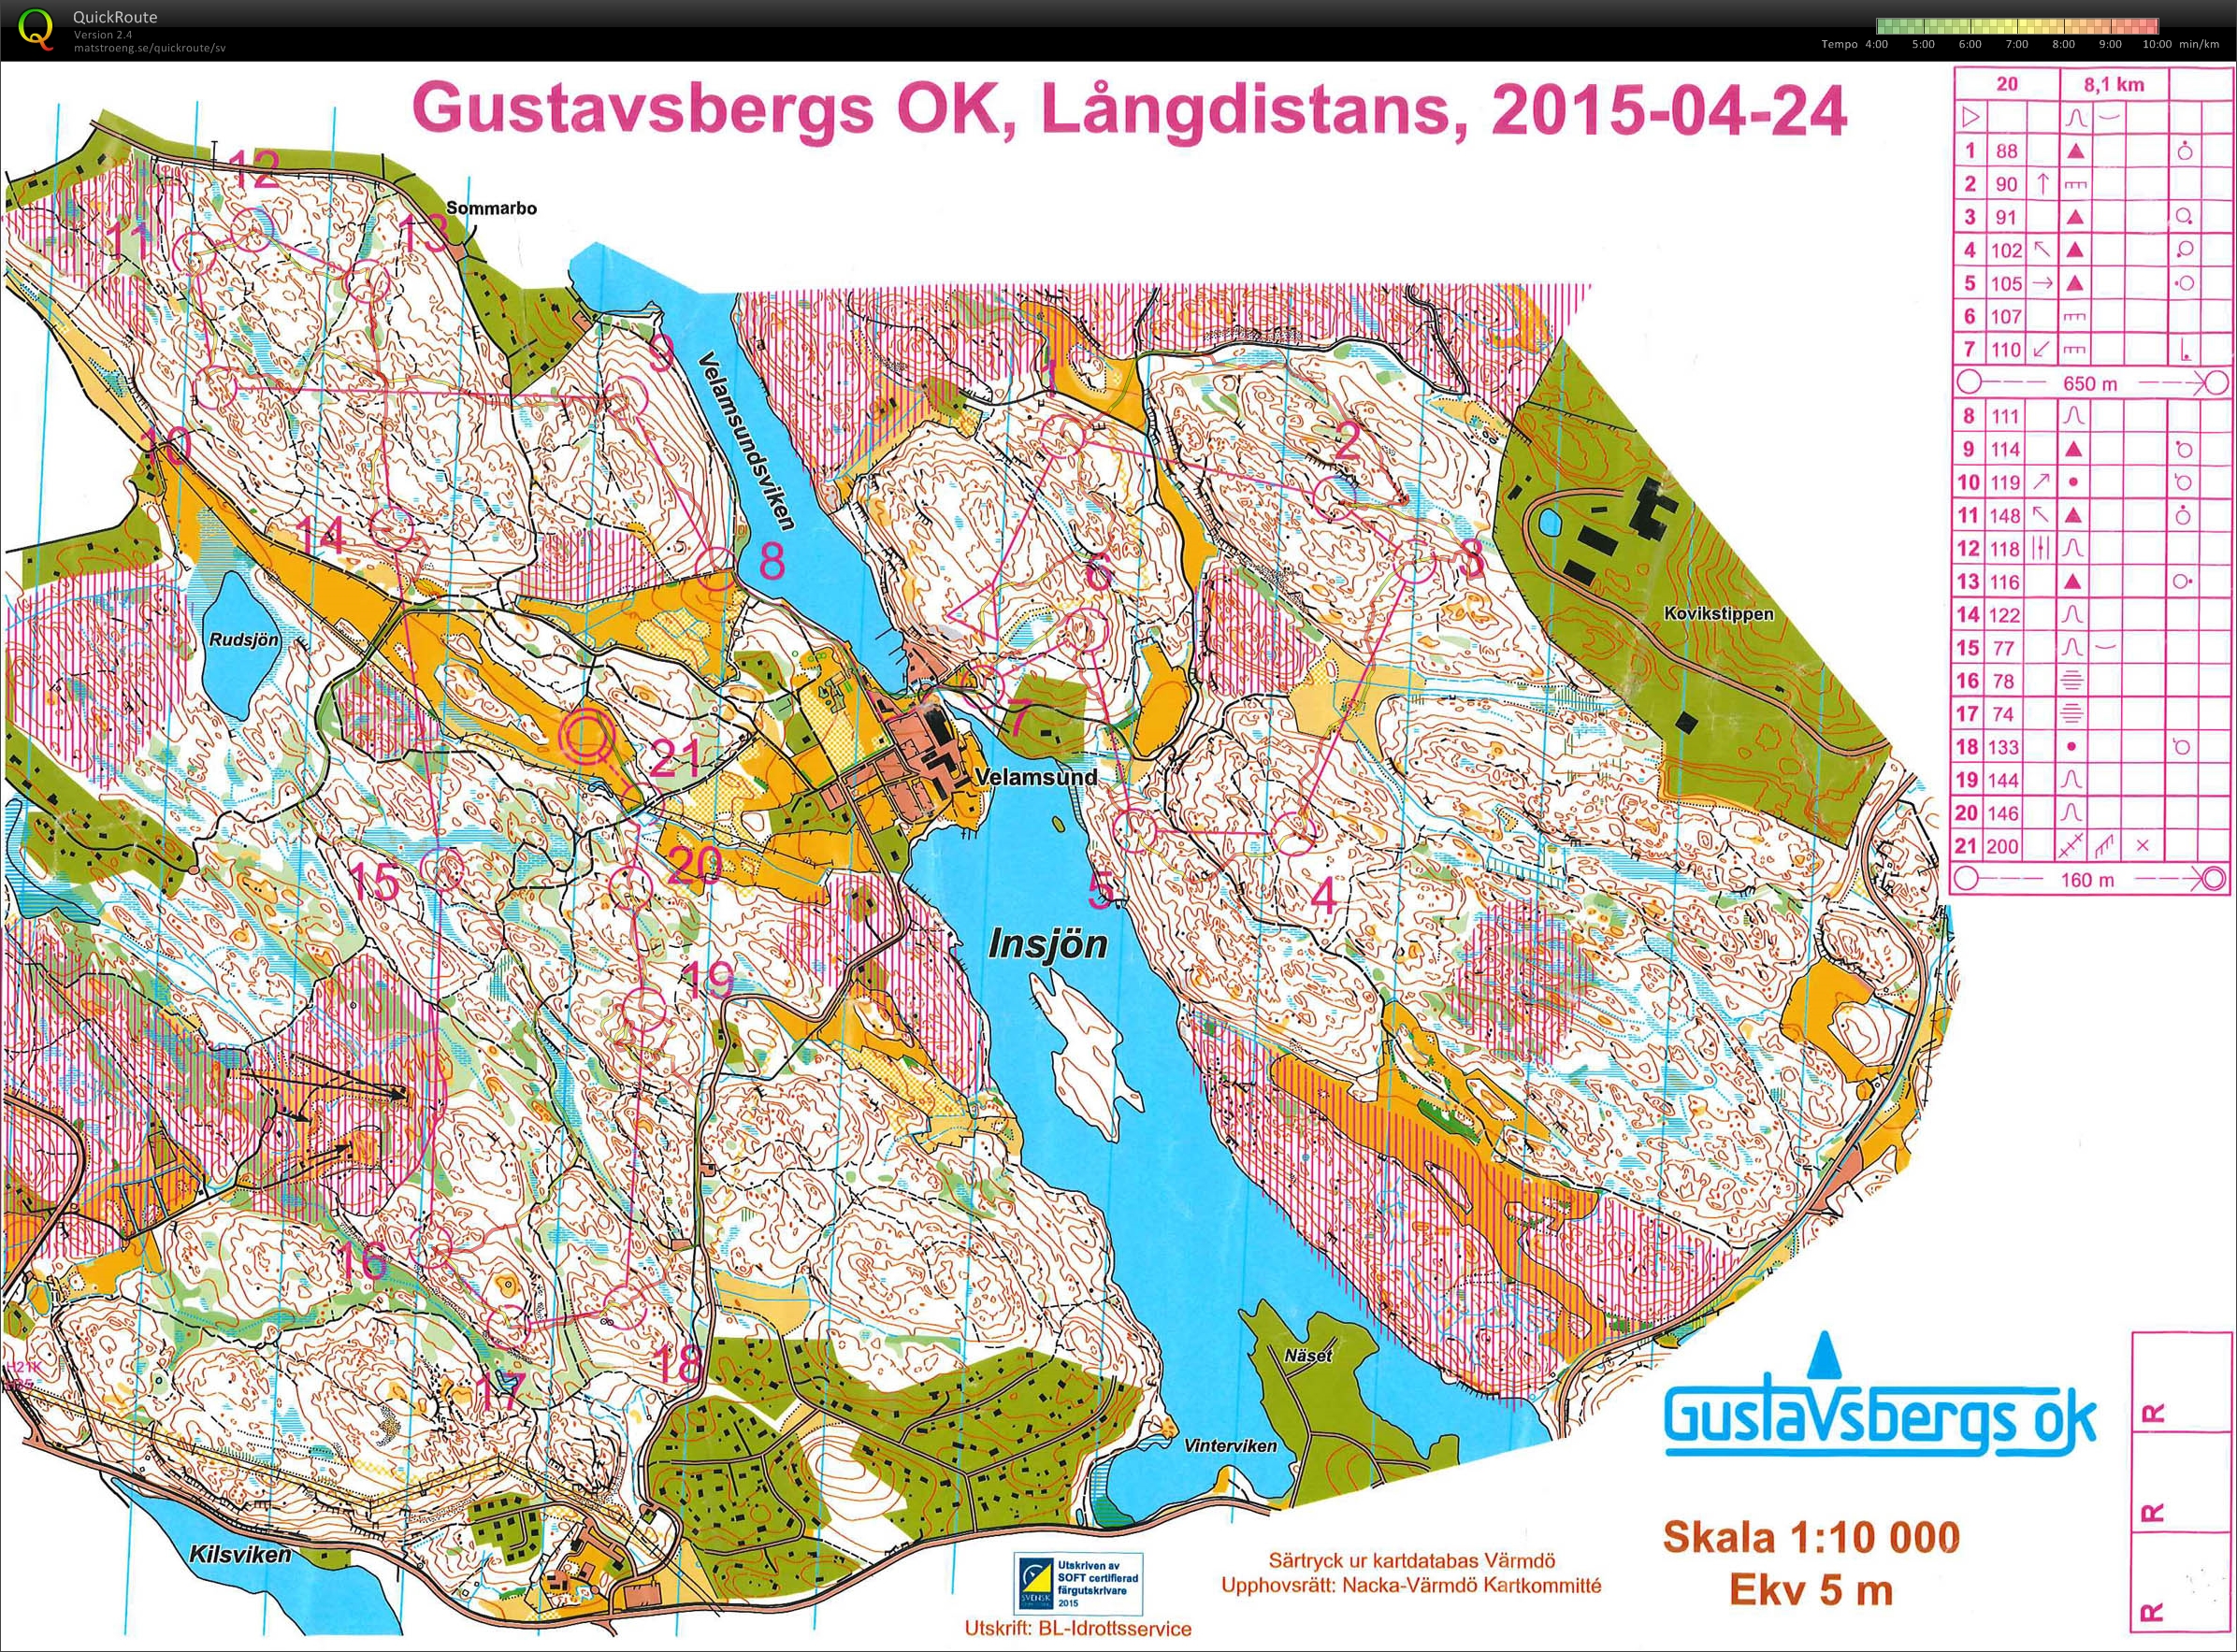 Gustavsbergs OK långdistans (2015-04-25)